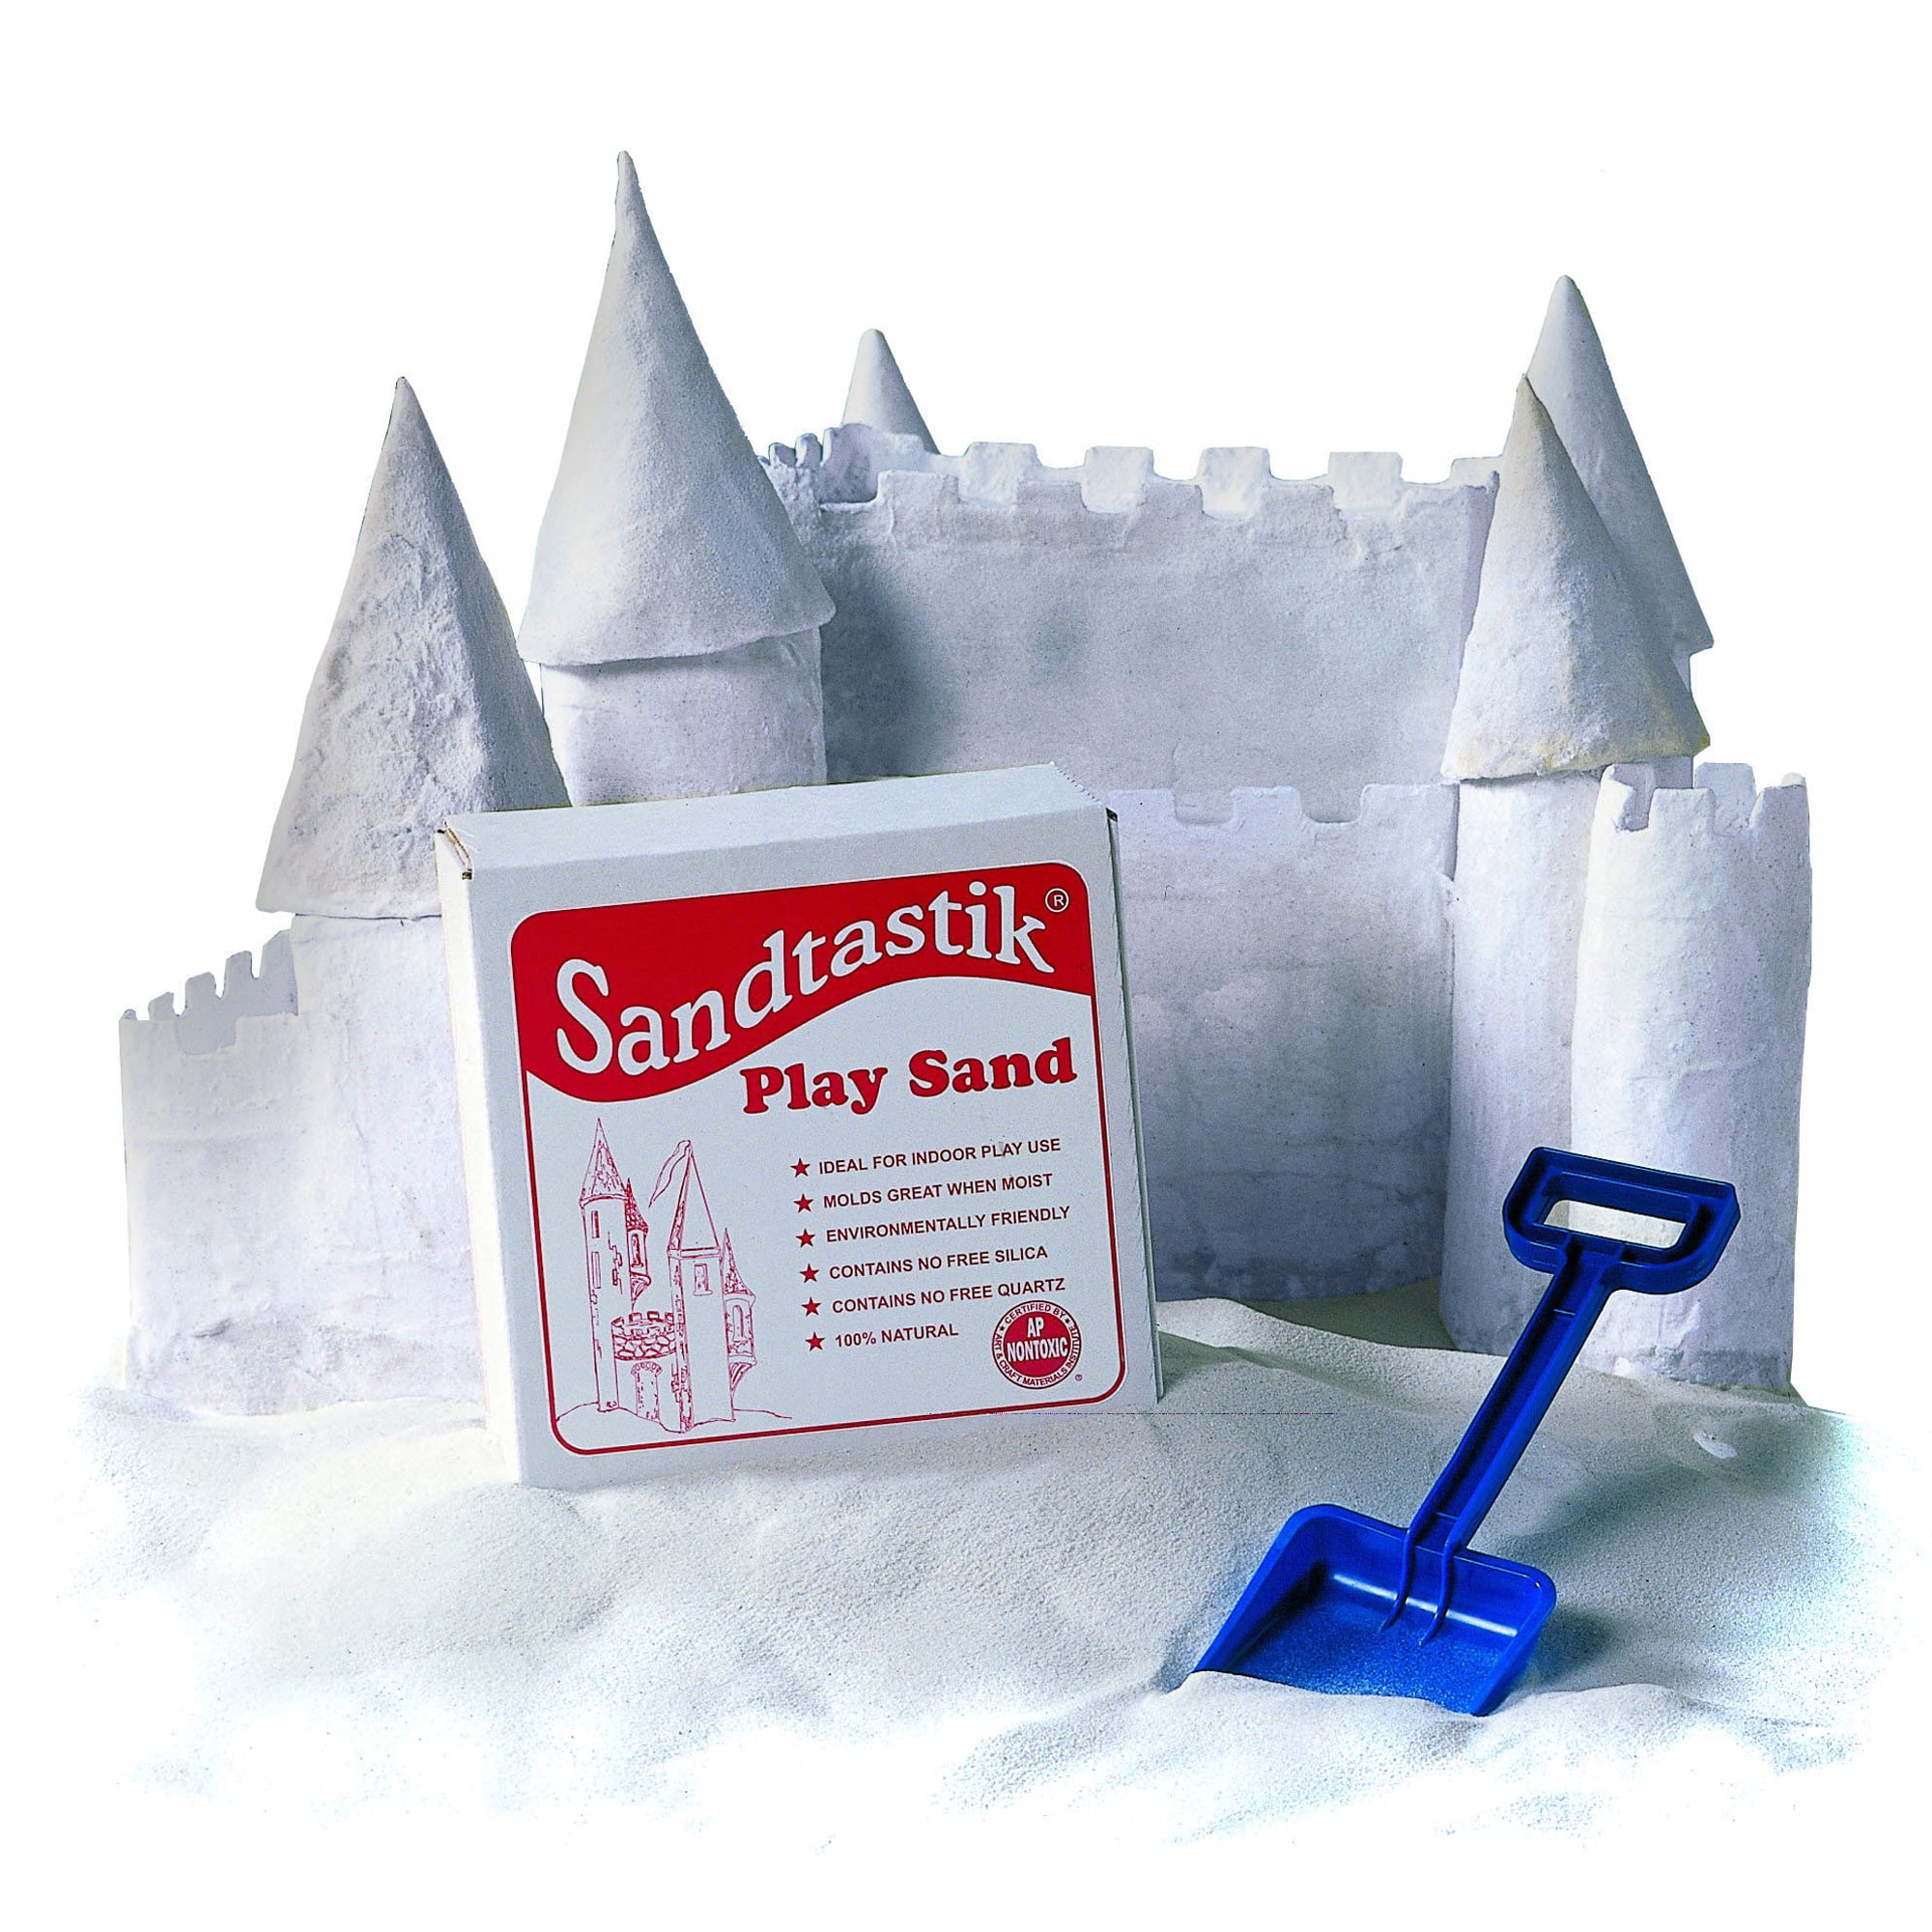 Sandtastik Products White Play Sand Walmart Com